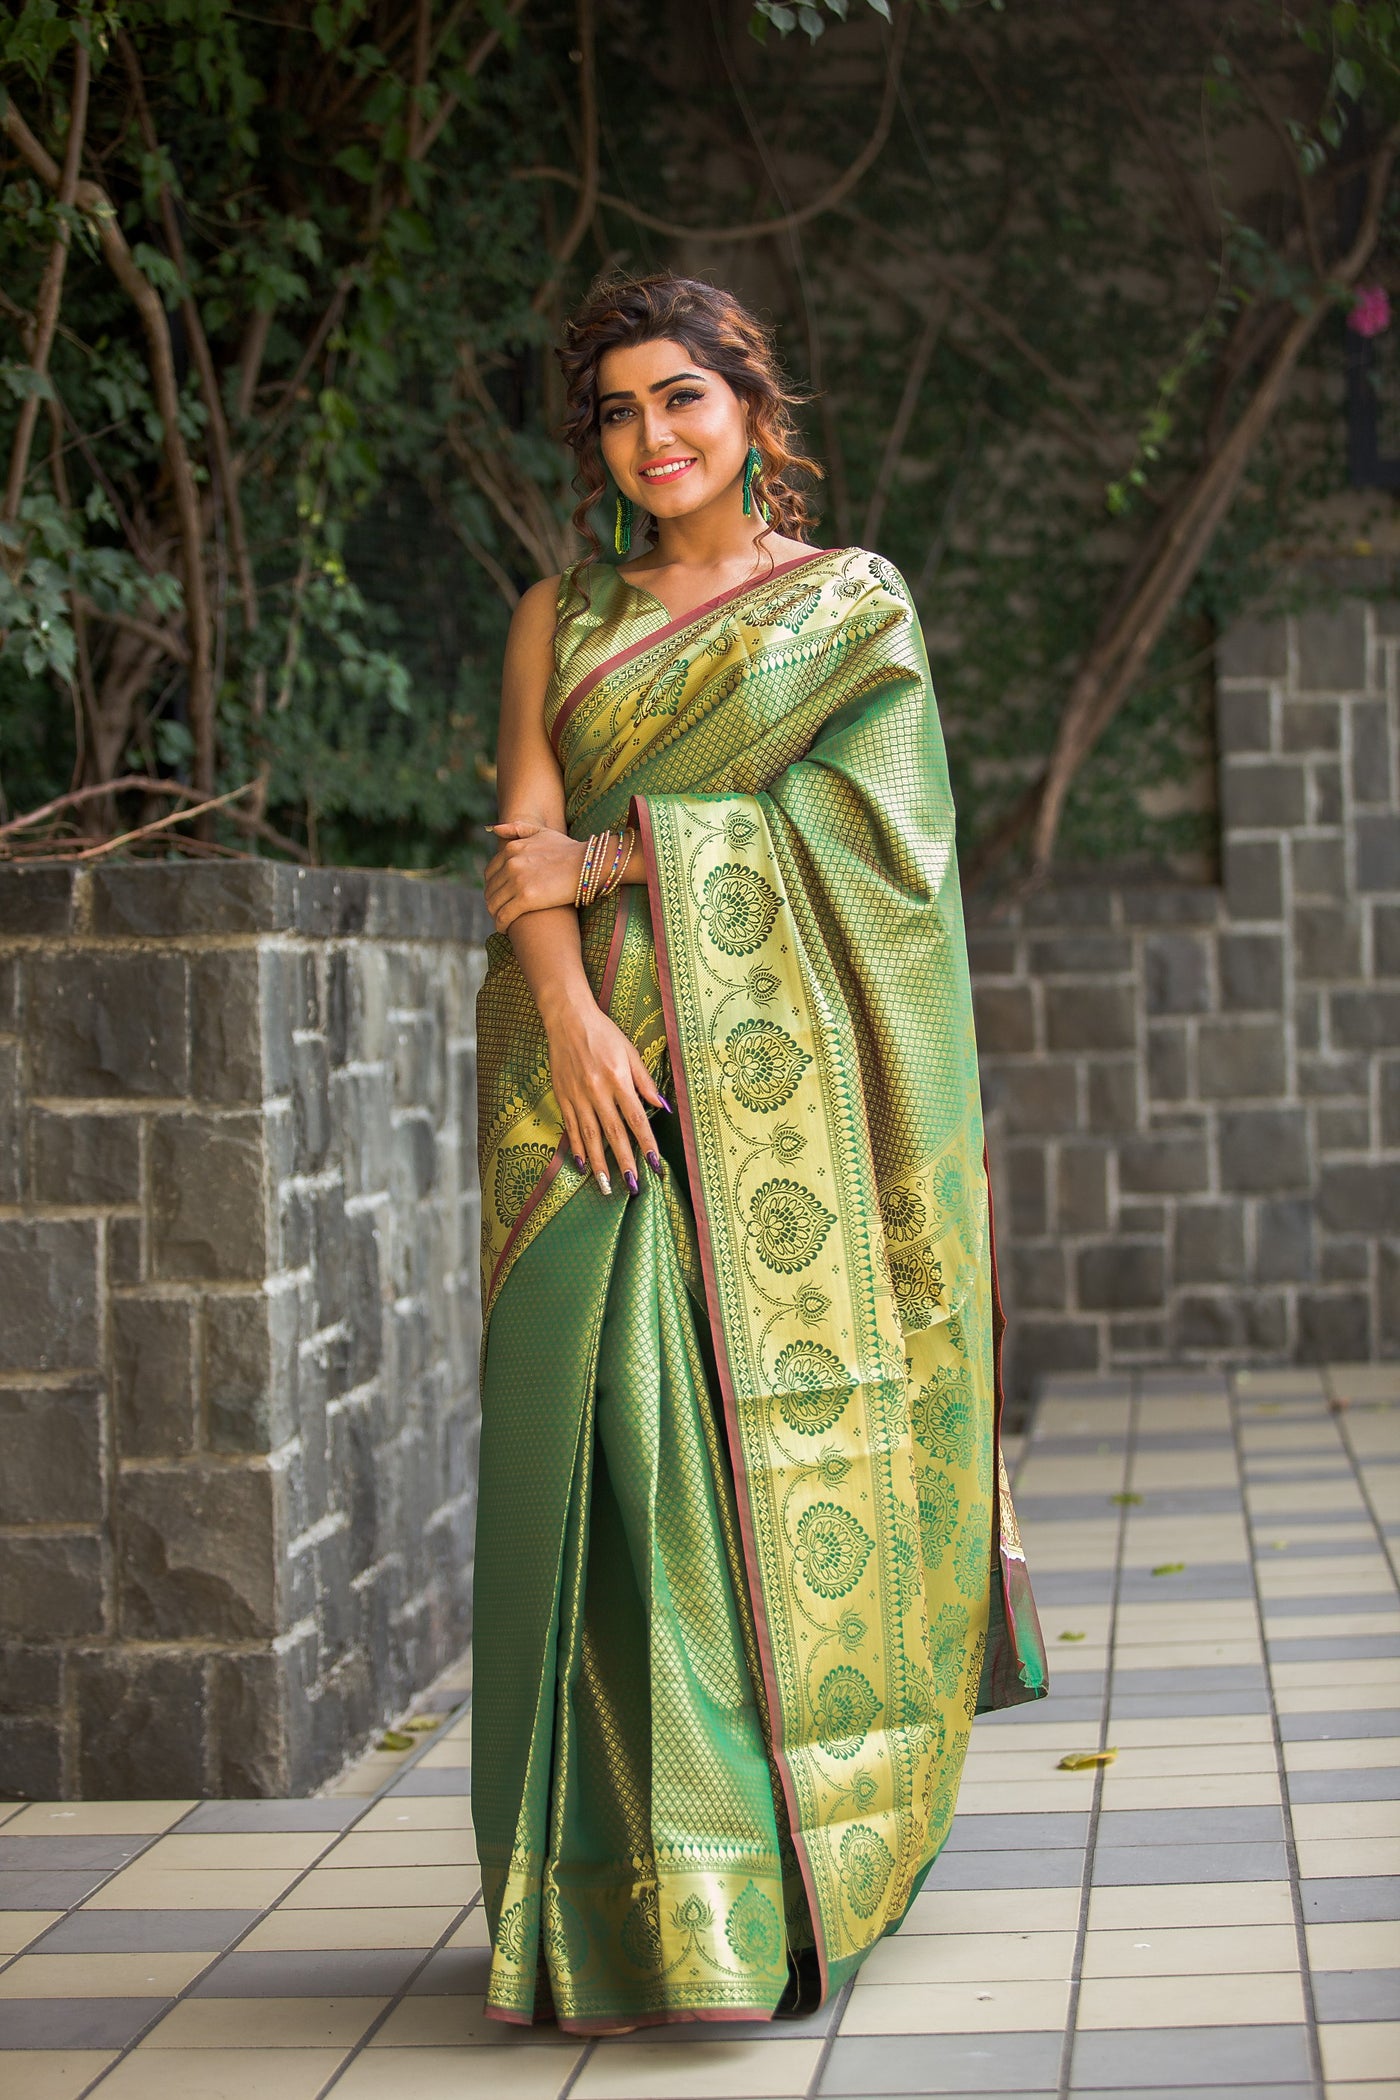 Green Banarasi Silk Saree - Indian Clothing in Denver, CO, Aurora, CO, Boulder, CO, Fort Collins, CO, Colorado Springs, CO, Parker, CO, Highlands Ranch, CO, Cherry Creek, CO, Centennial, CO, and Longmont, CO. Nationwide shipping USA - India Fashion X